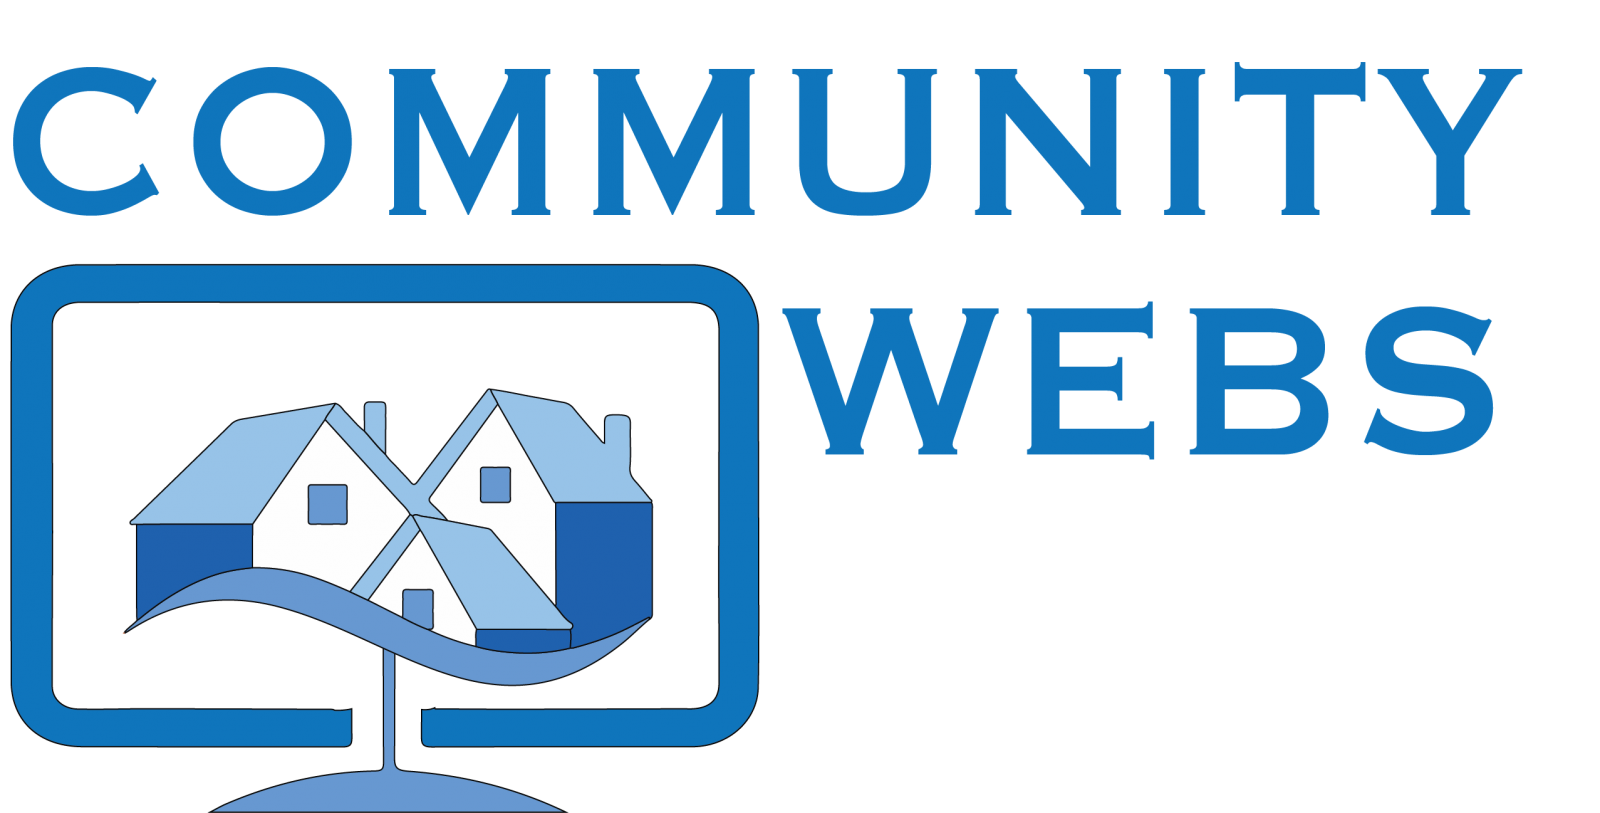 Community Webs